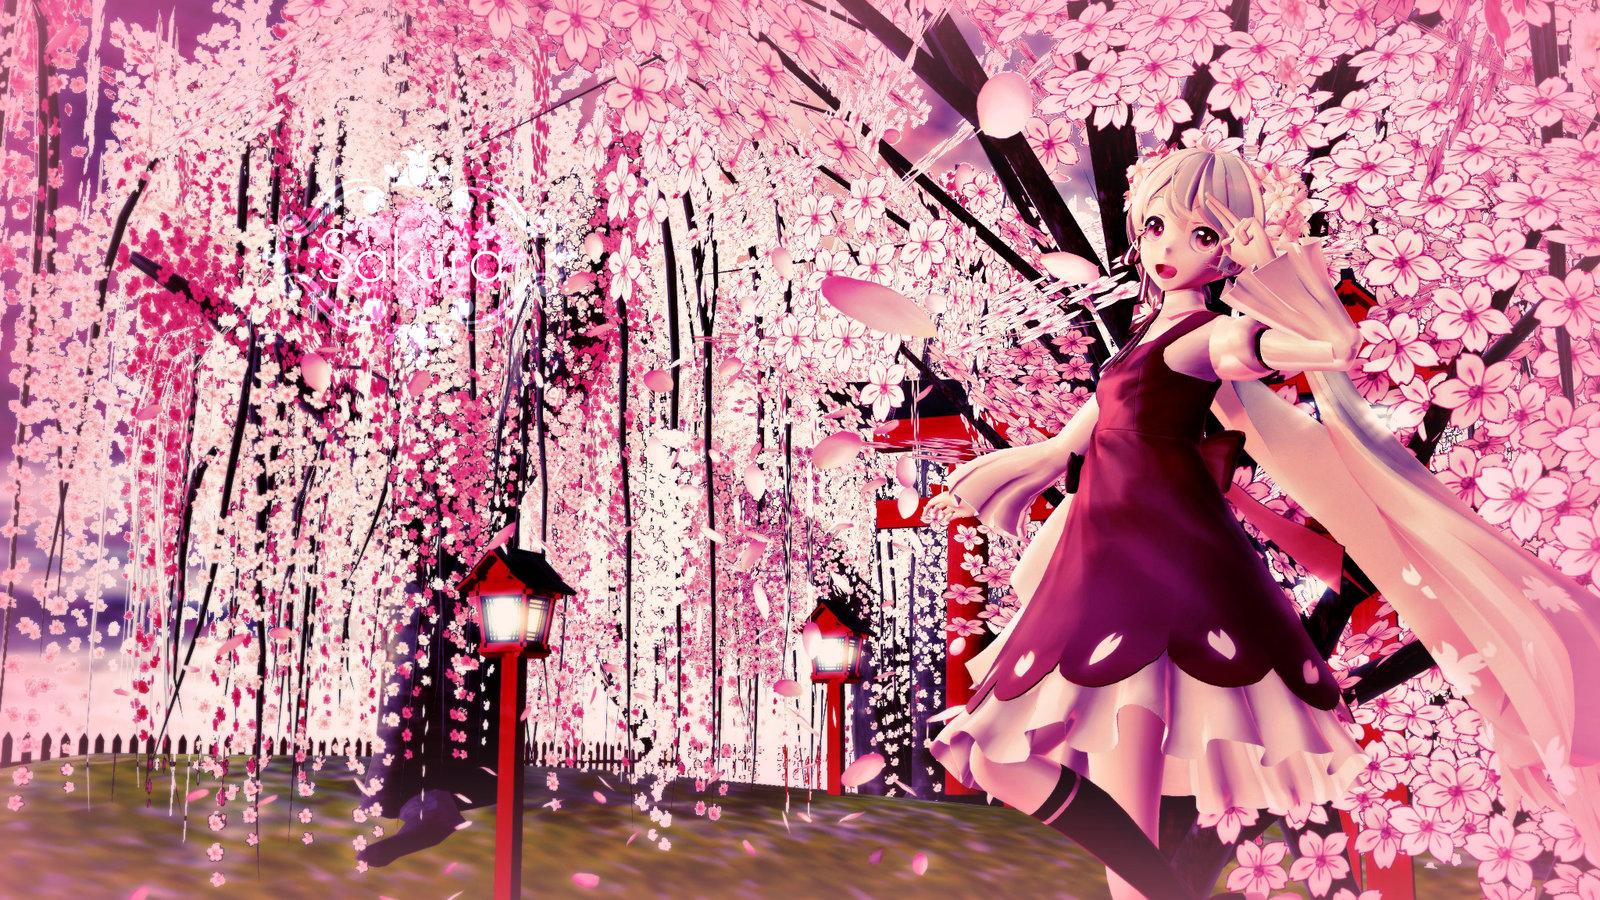 Free download MMD] Sakura wallpaper HD by LenMJPU [1600x900